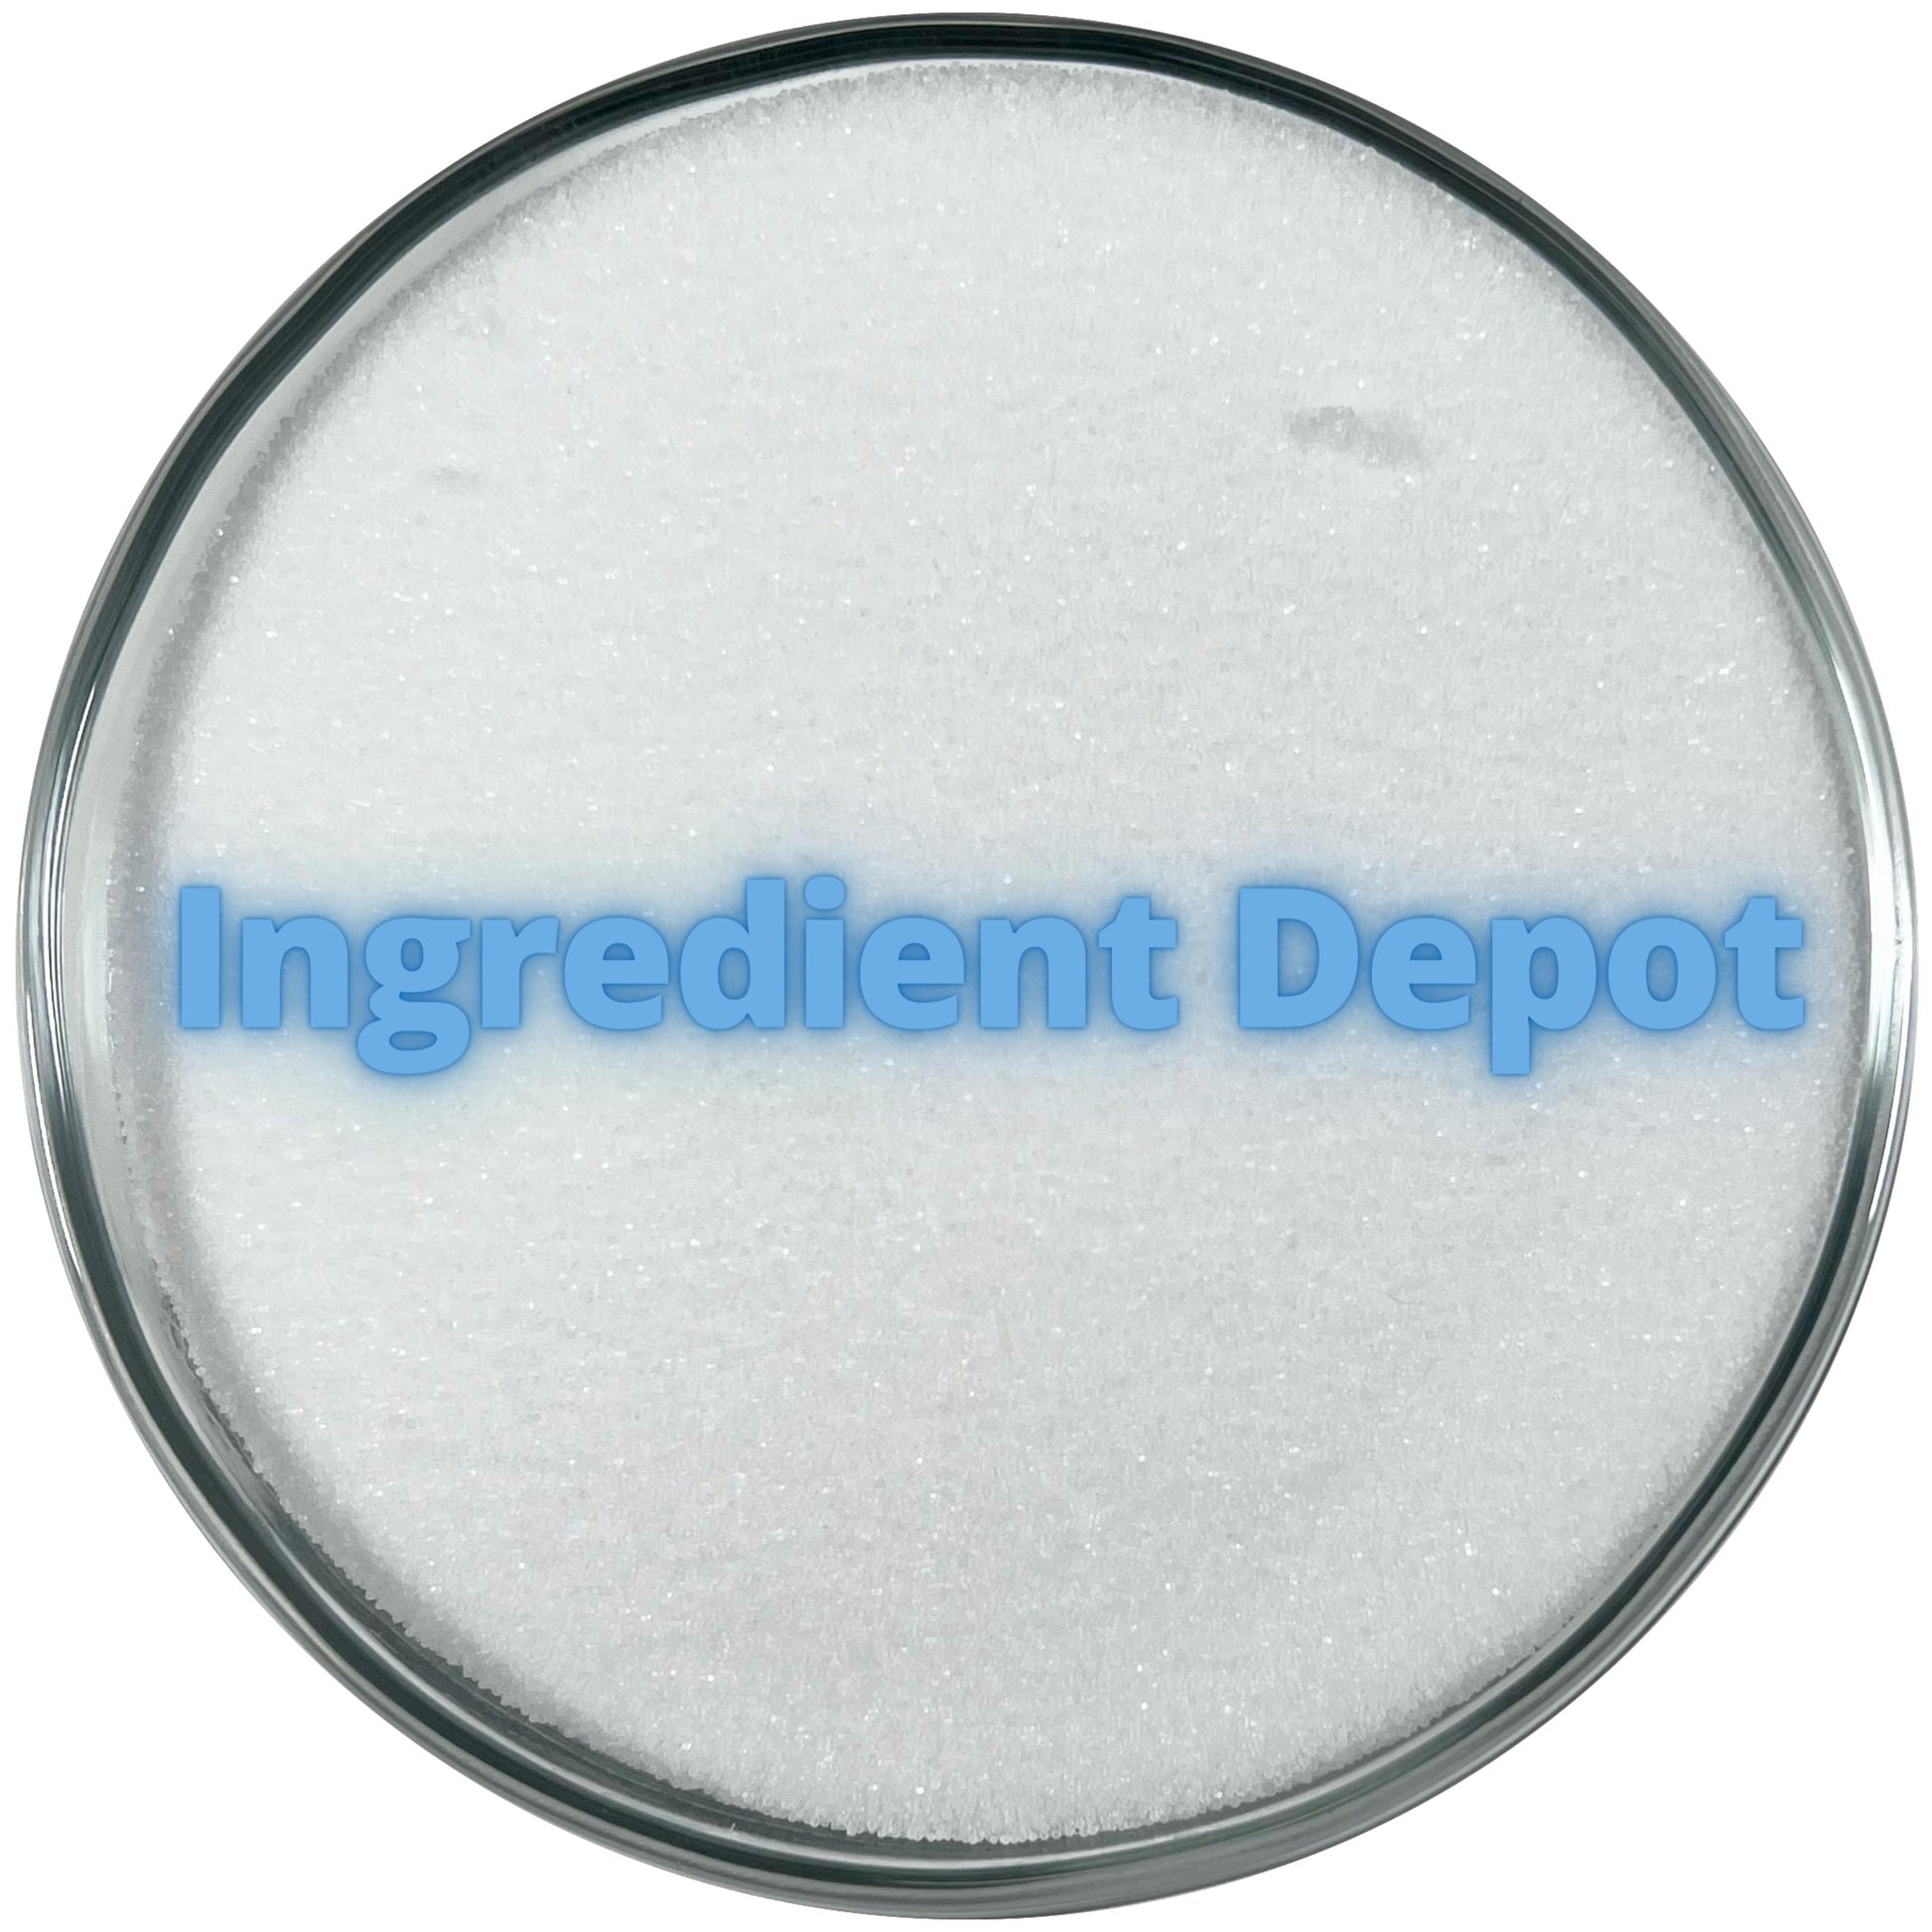 Sodium Chloride Grade Premium Purified USP Grade 8 kgs - IngredientDepot.com